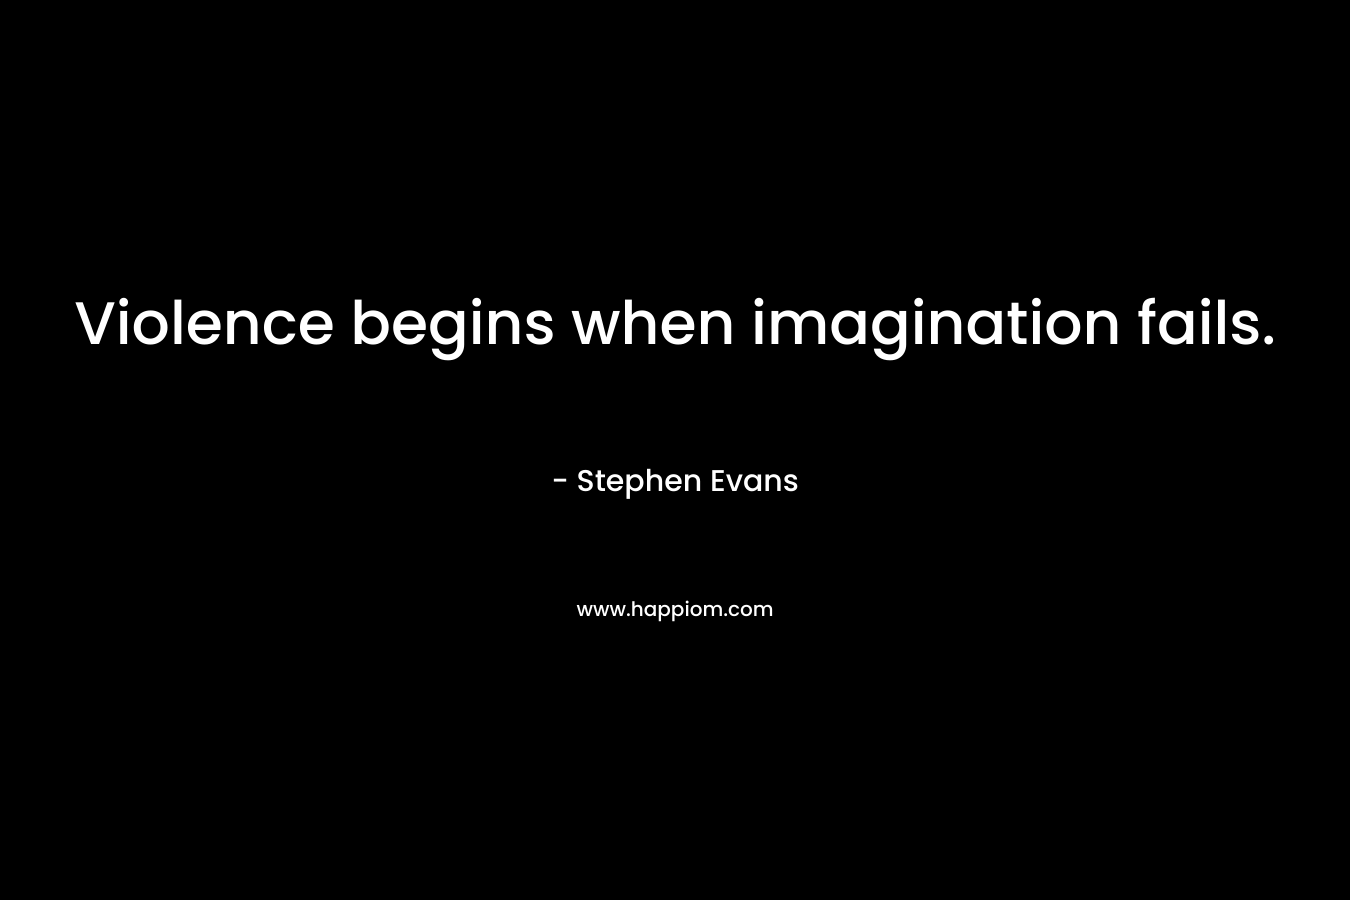 Violence begins when imagination fails.